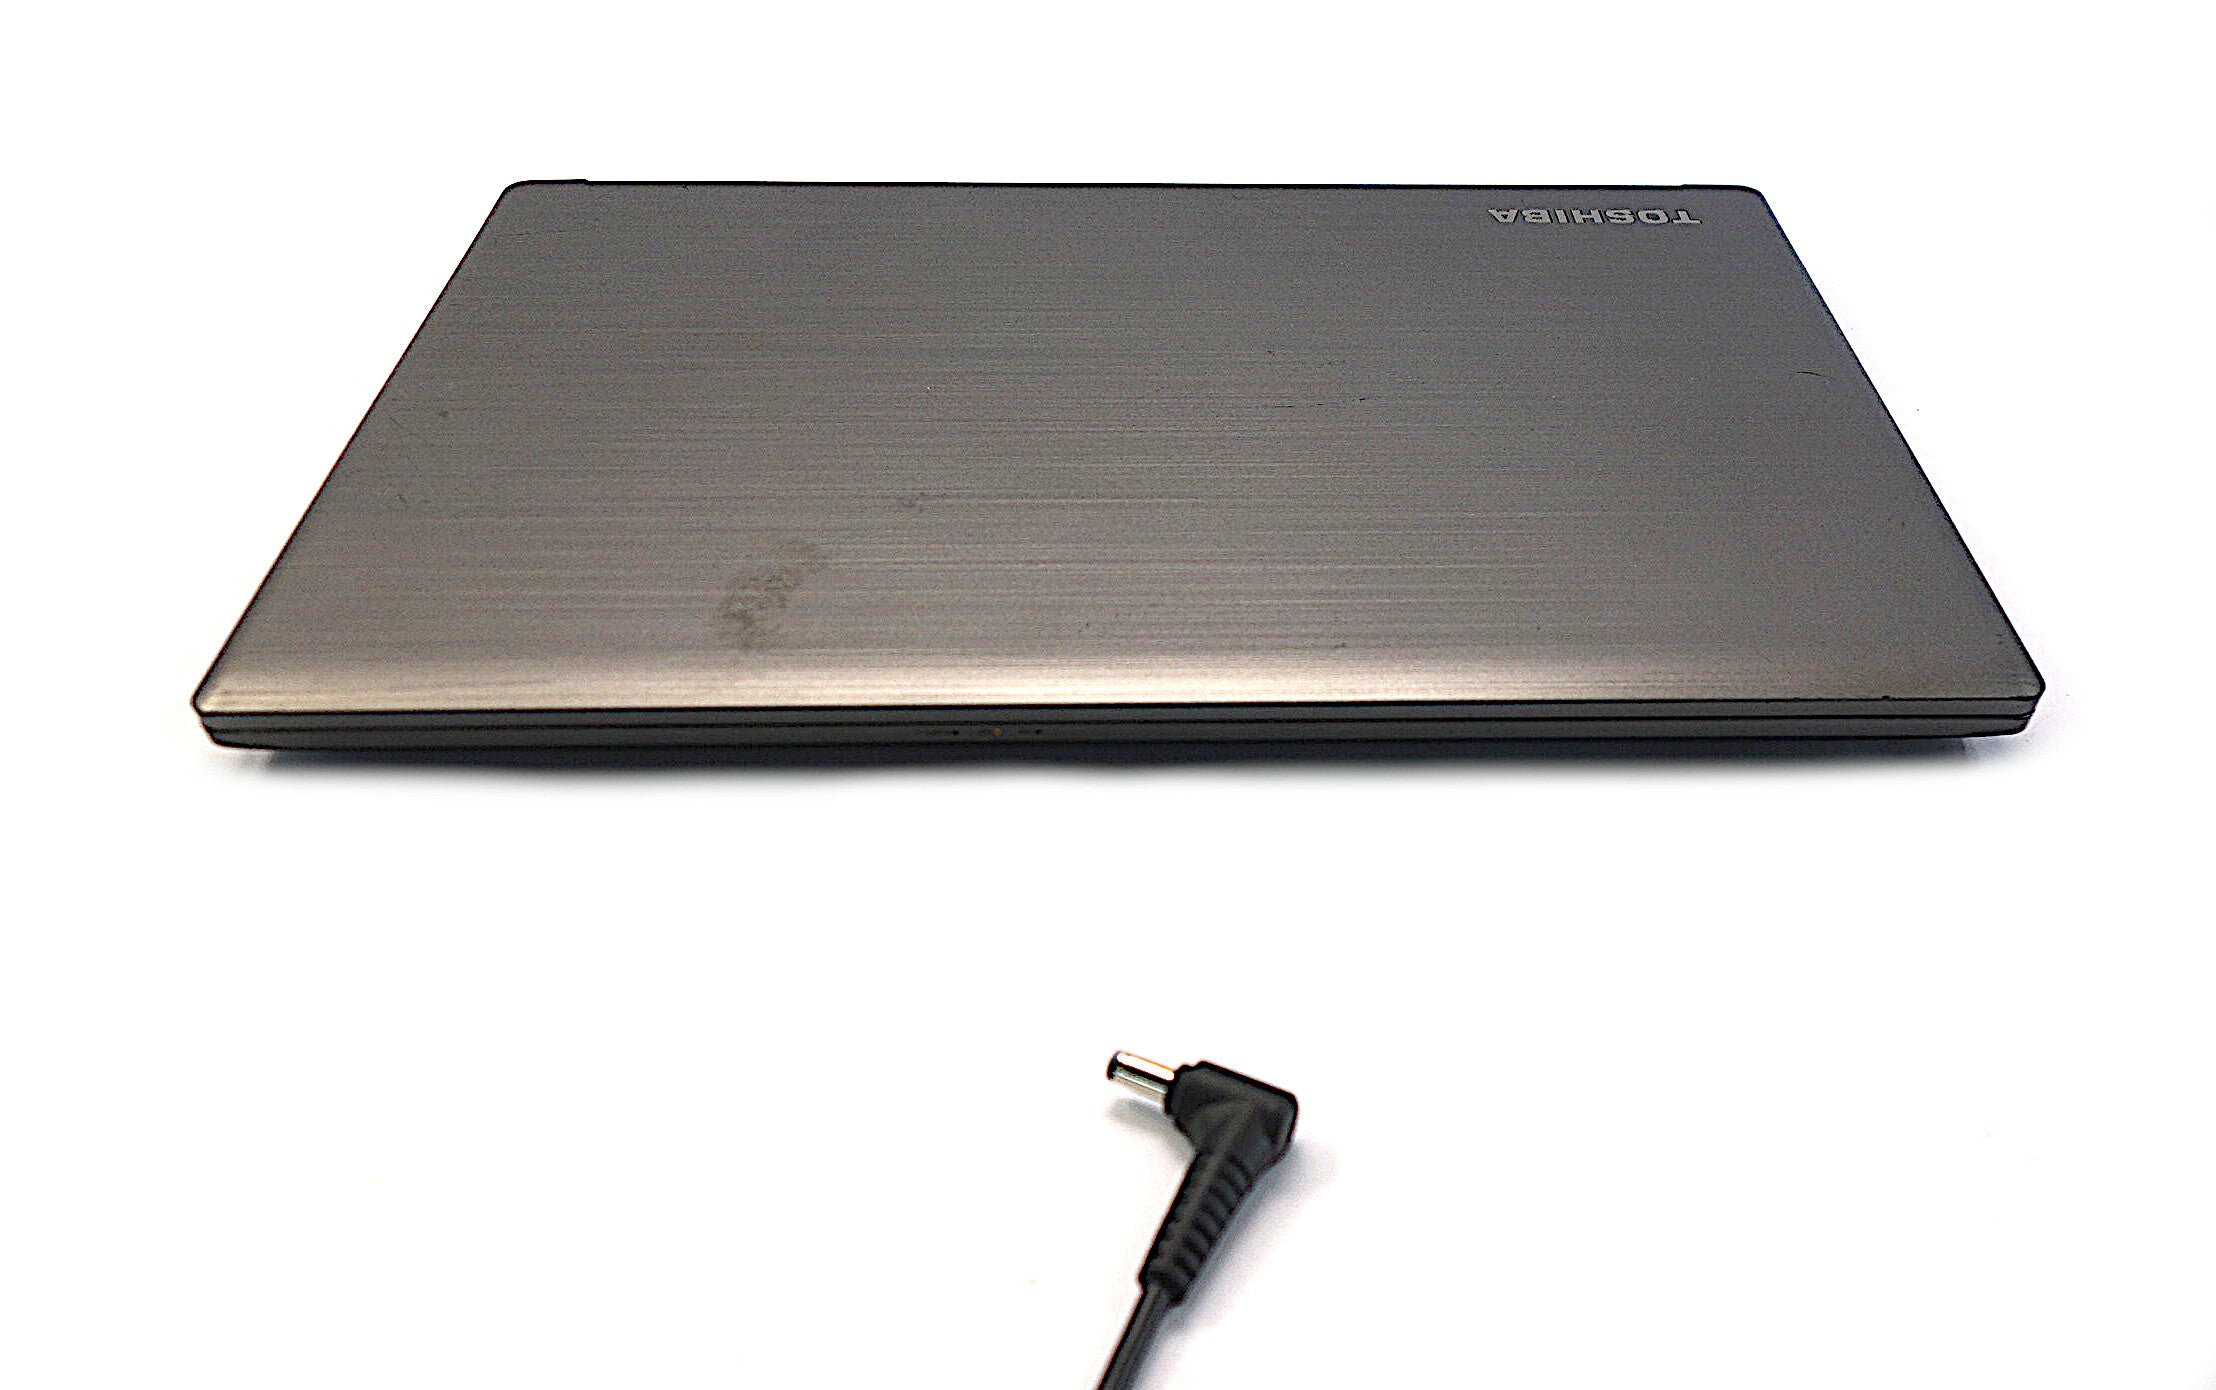 Toshiba Tecra A40-C Laptop, 13.9" i5 6th Gen, 8GB RAM, 256GB SSD